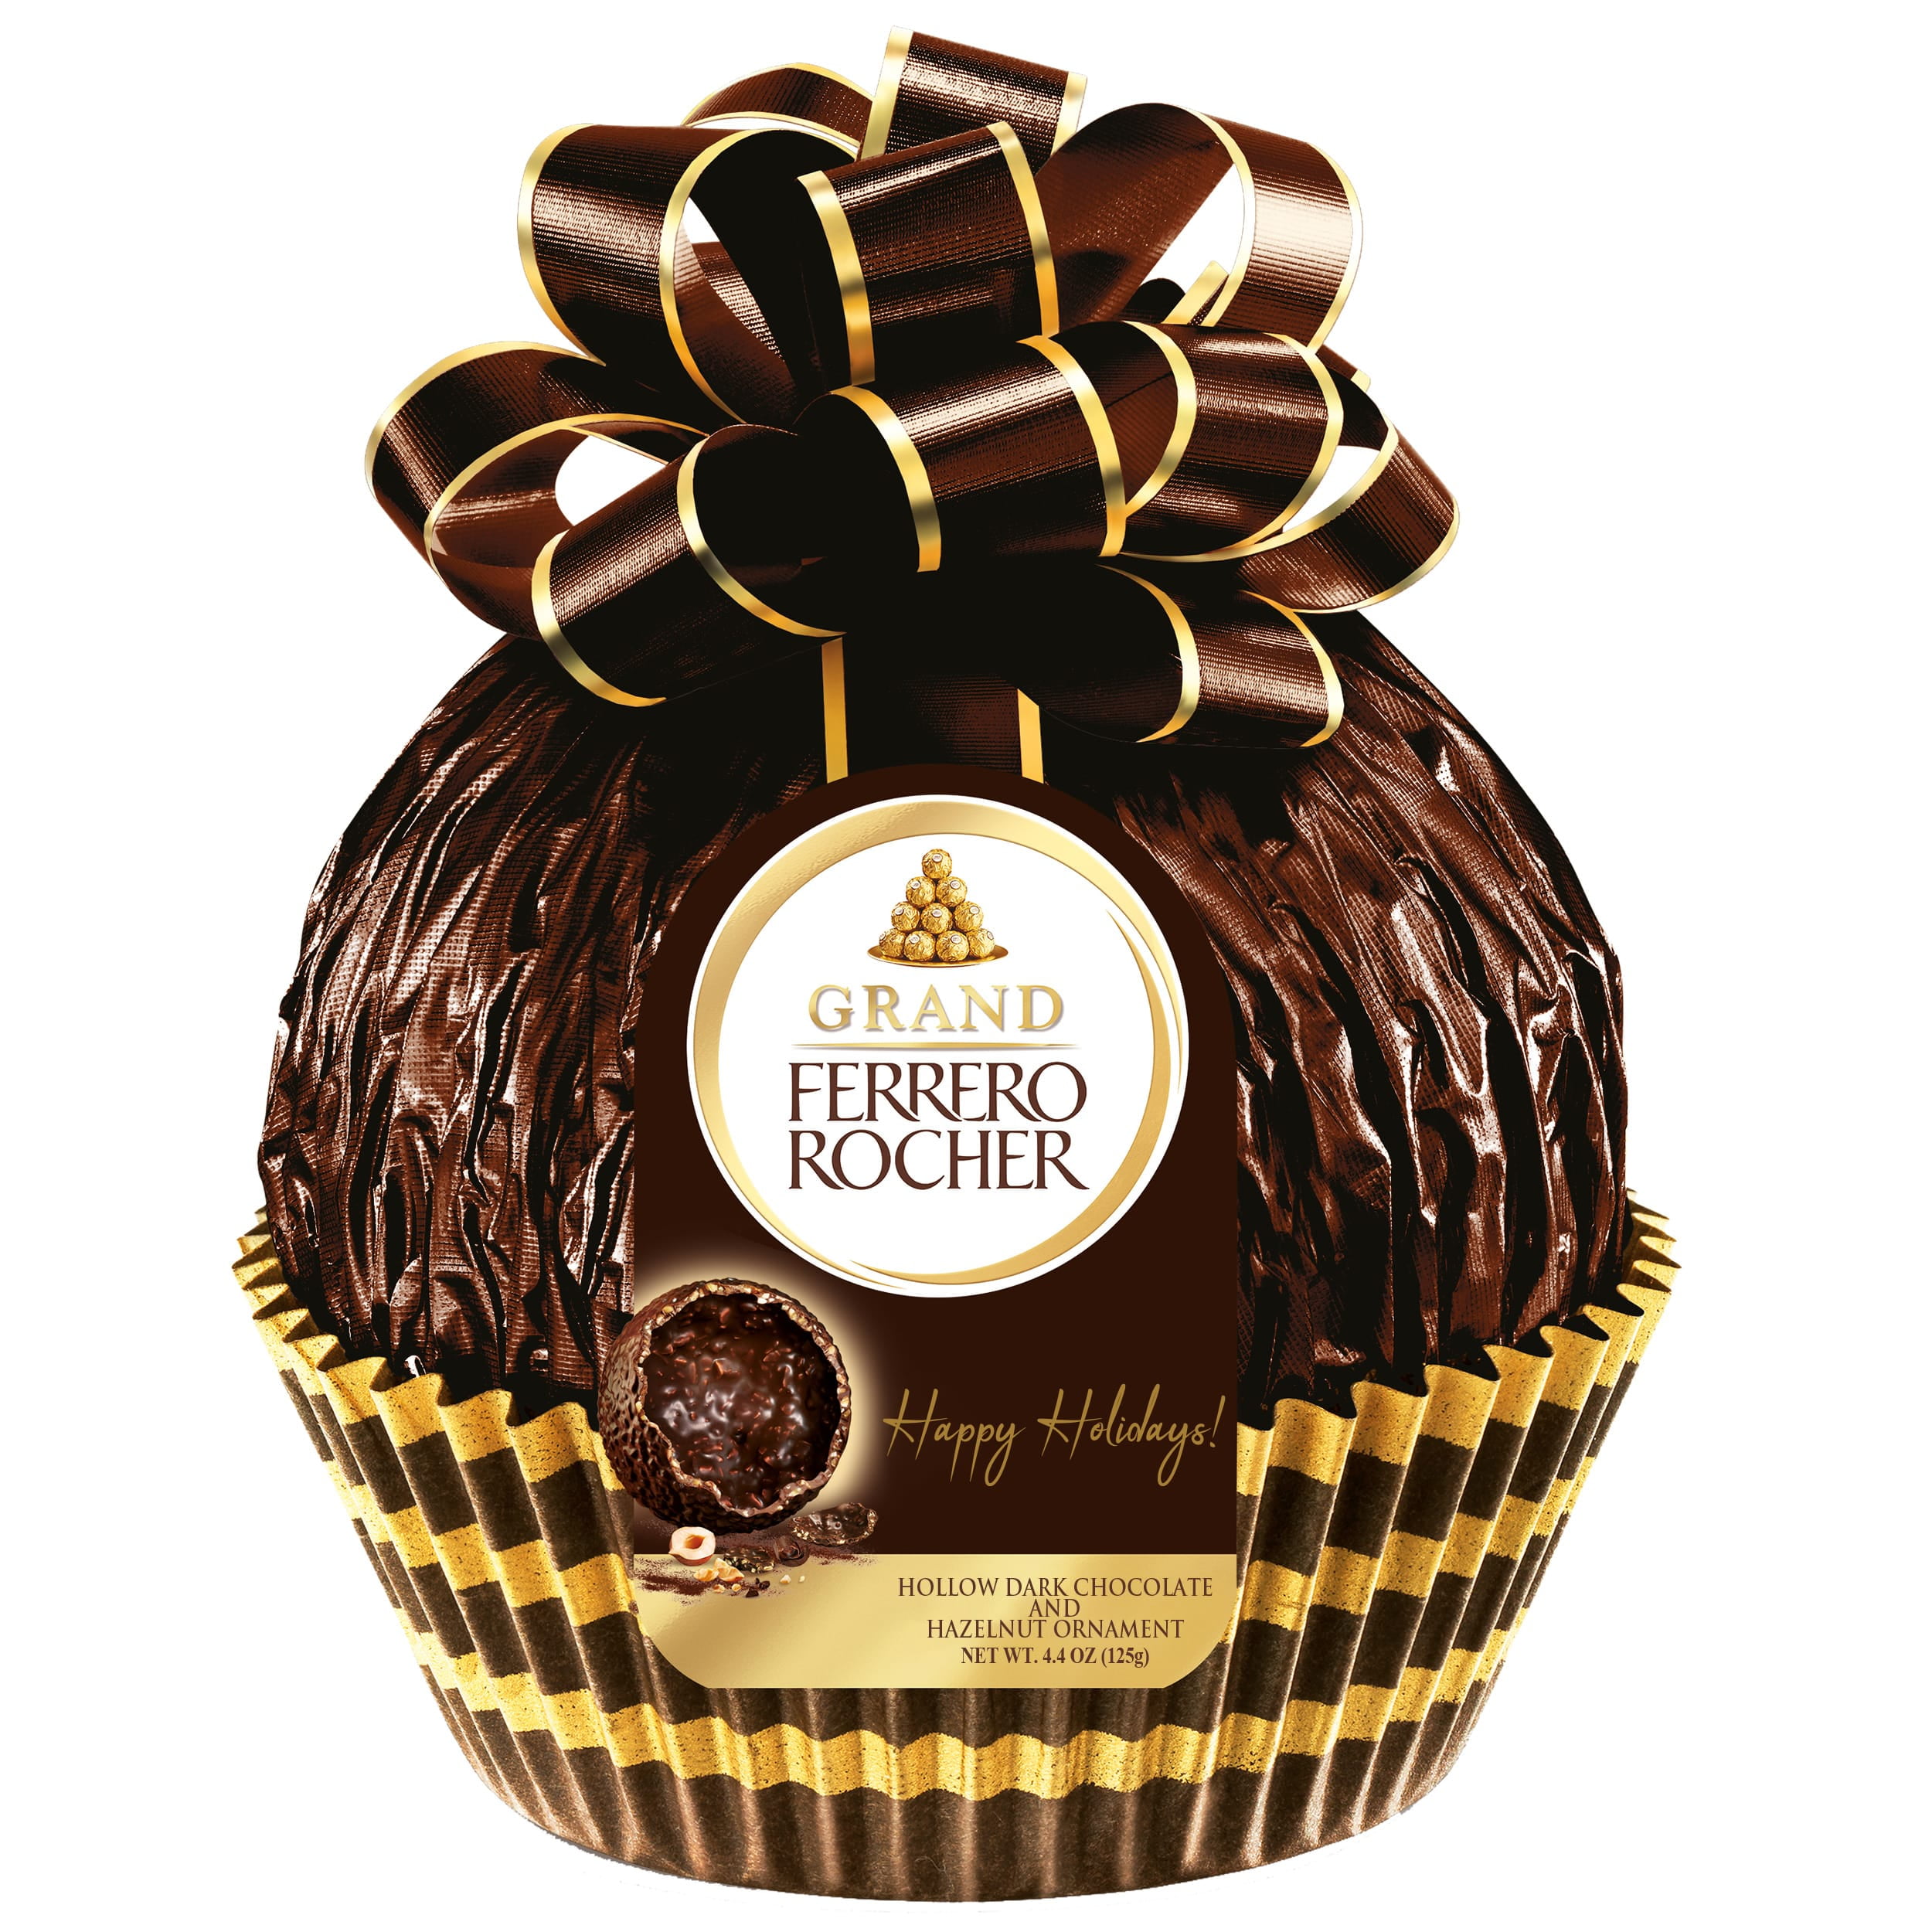 Grand Ferrero Rocher Premium Gourmet Dark Chocolate Hazelnut, Great Holiday Gift Box, 4.4 oz